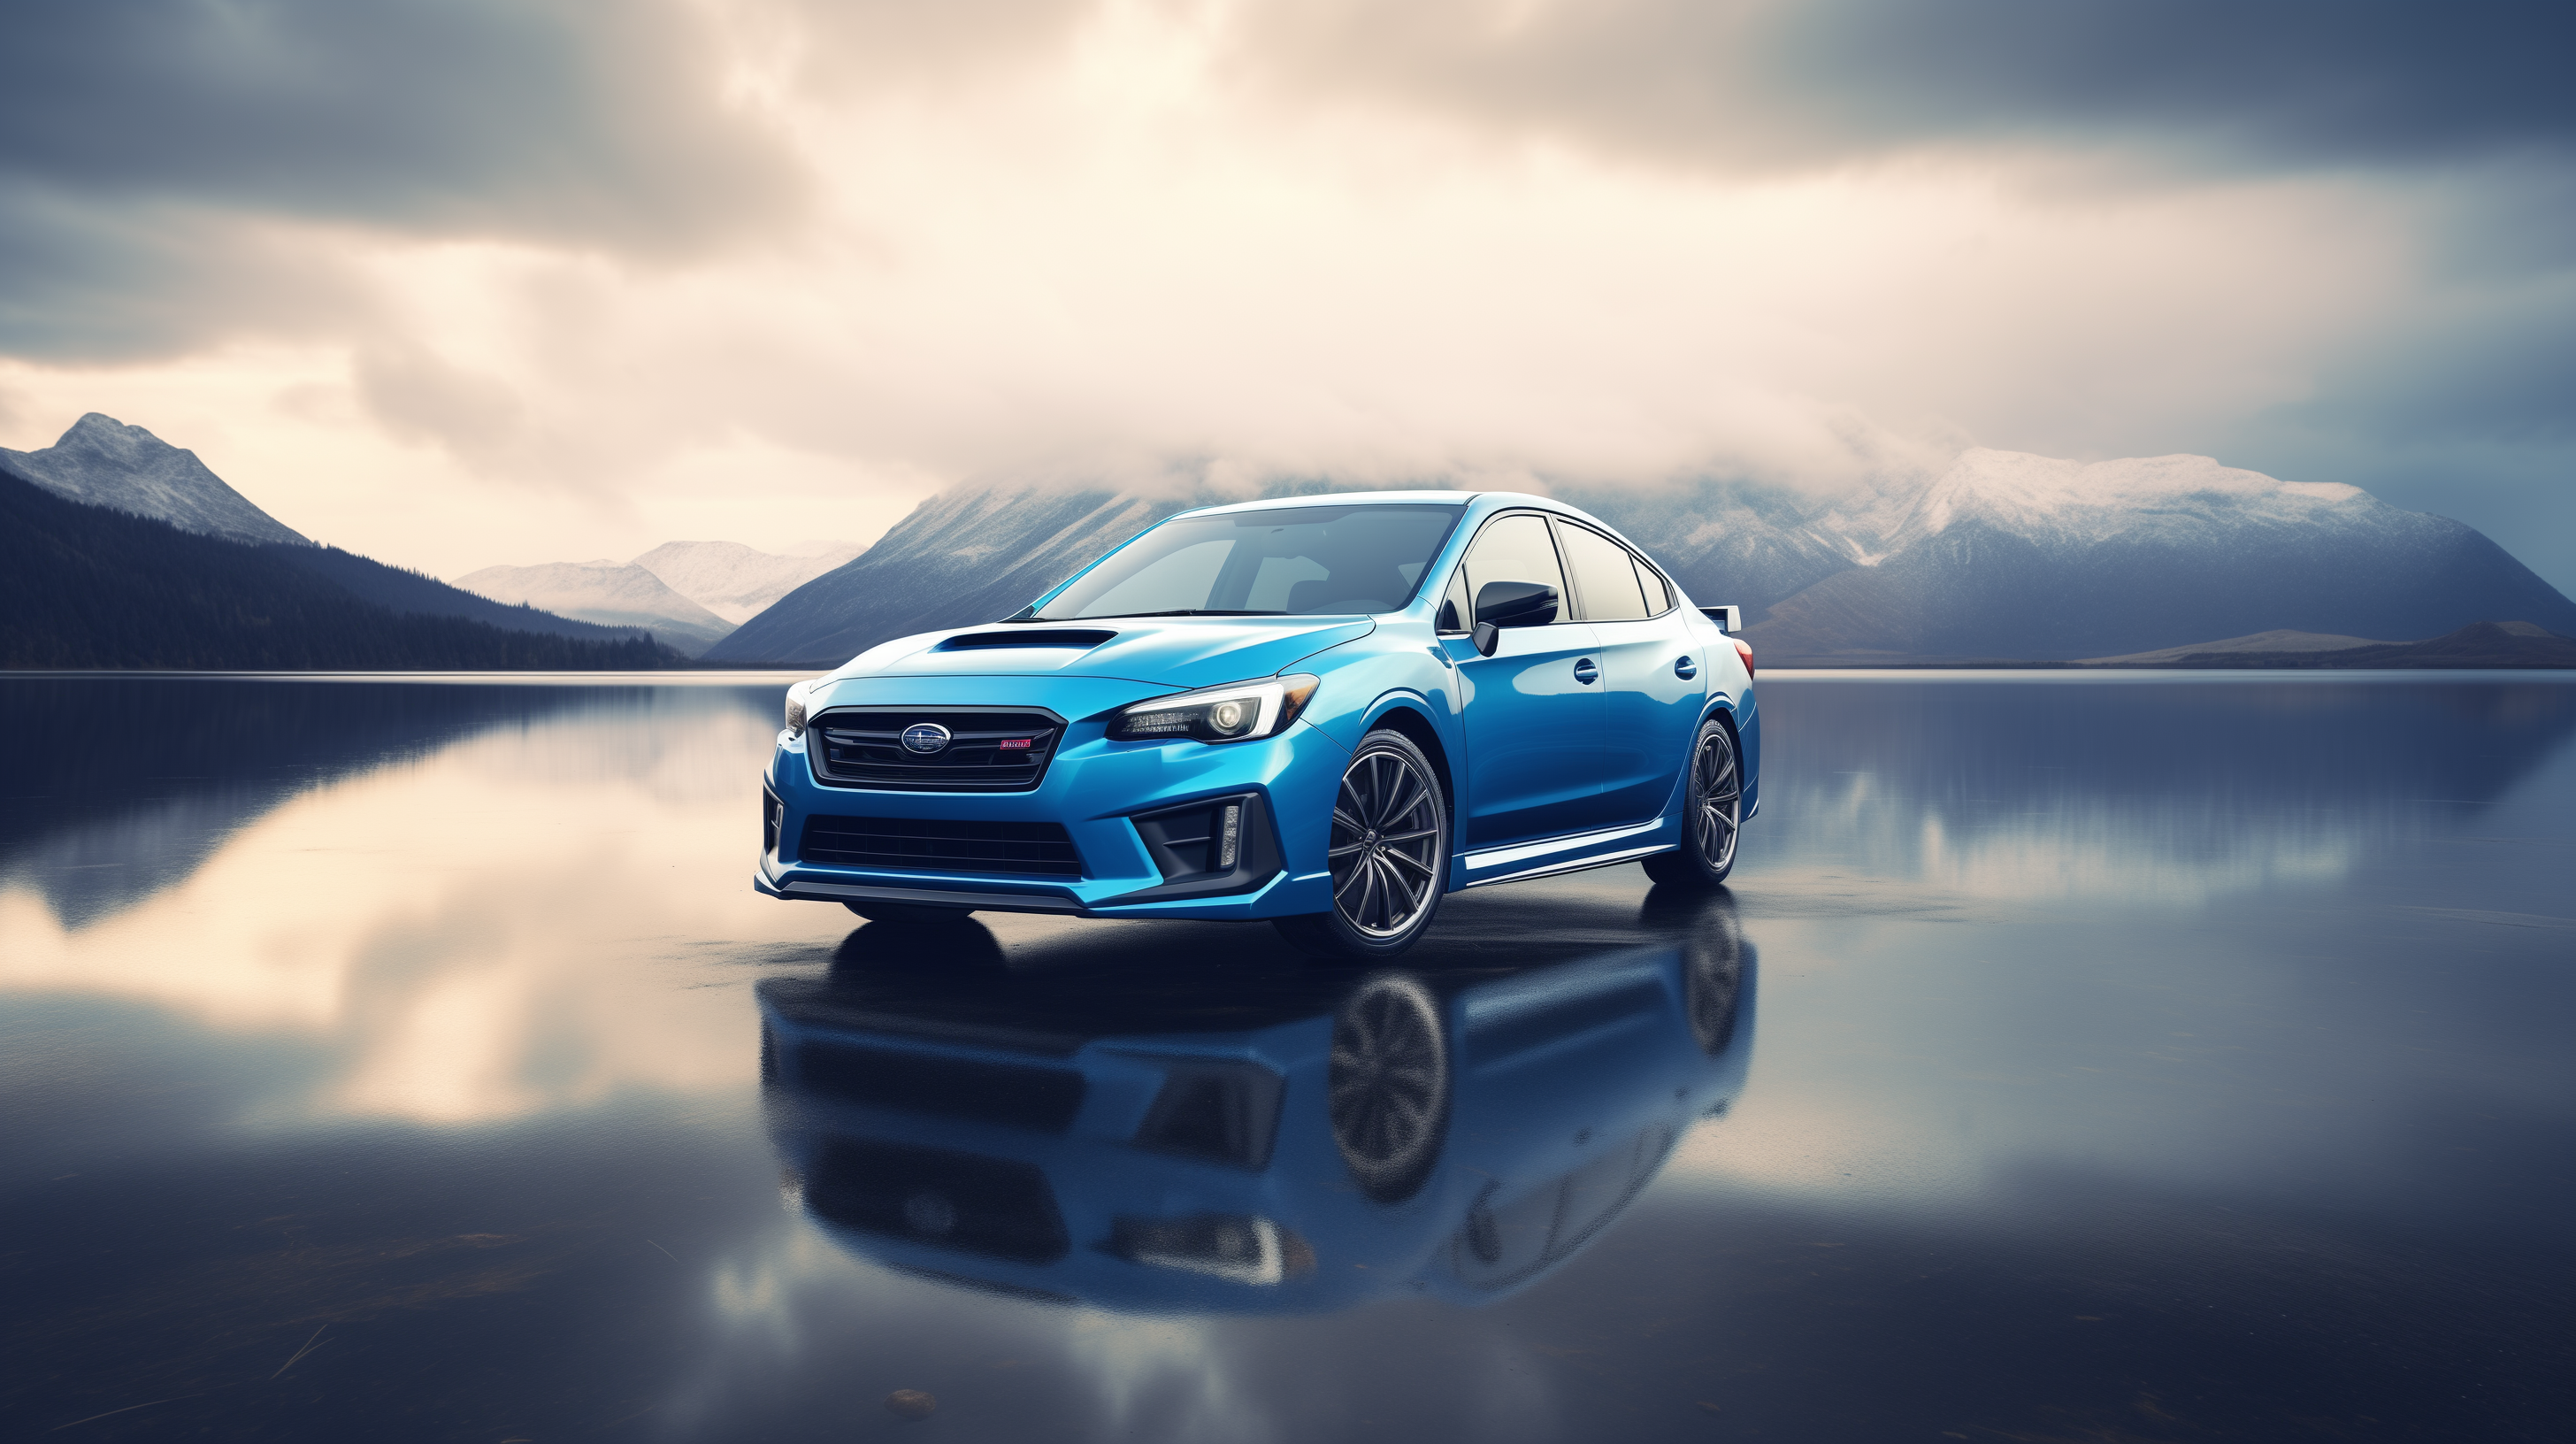 Blue Subaru car HD desktop wallpaper with mountain and lake reflection background.